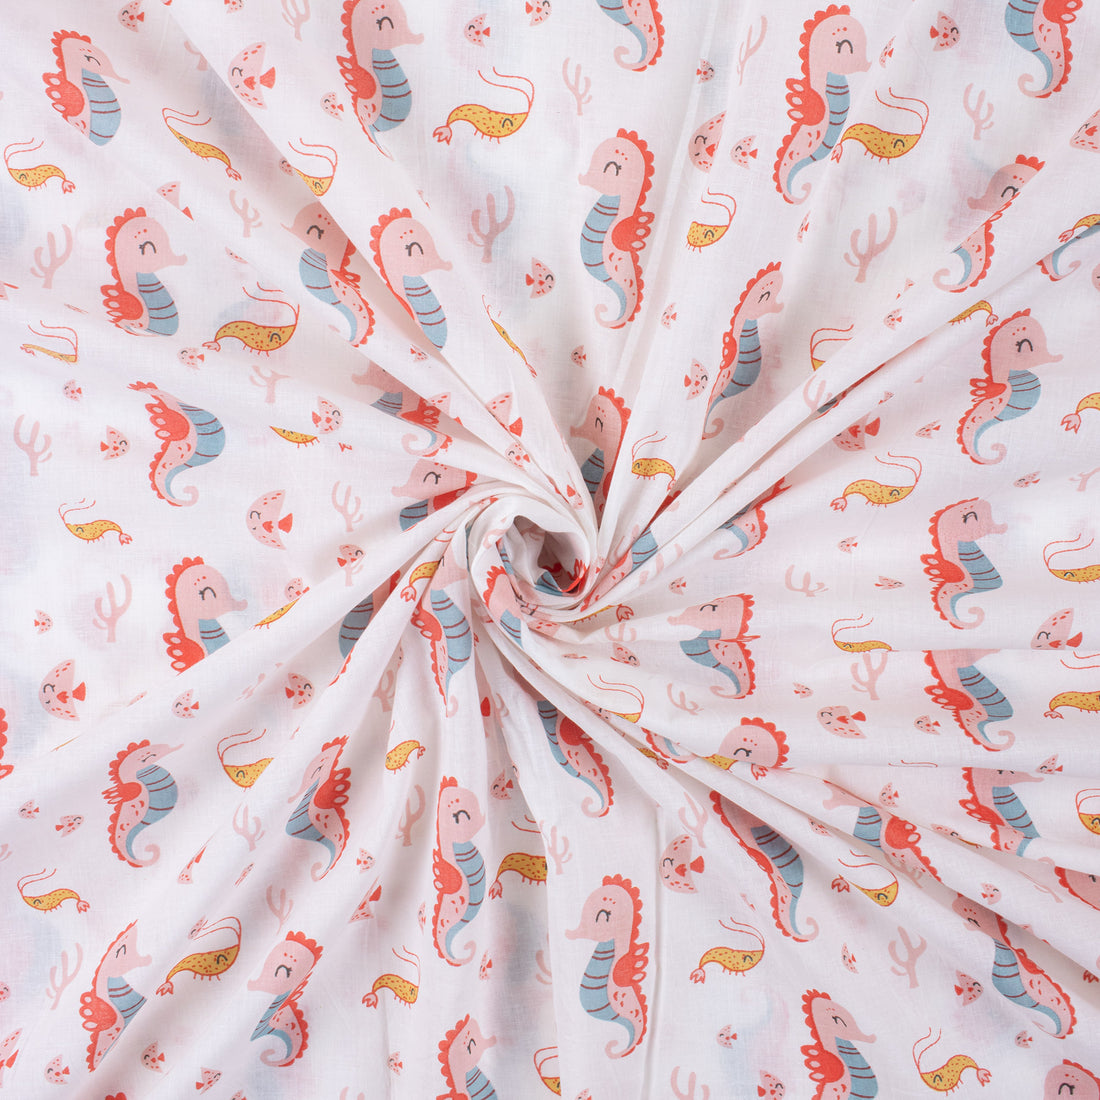 Seahorse Print High-Quality Fabric